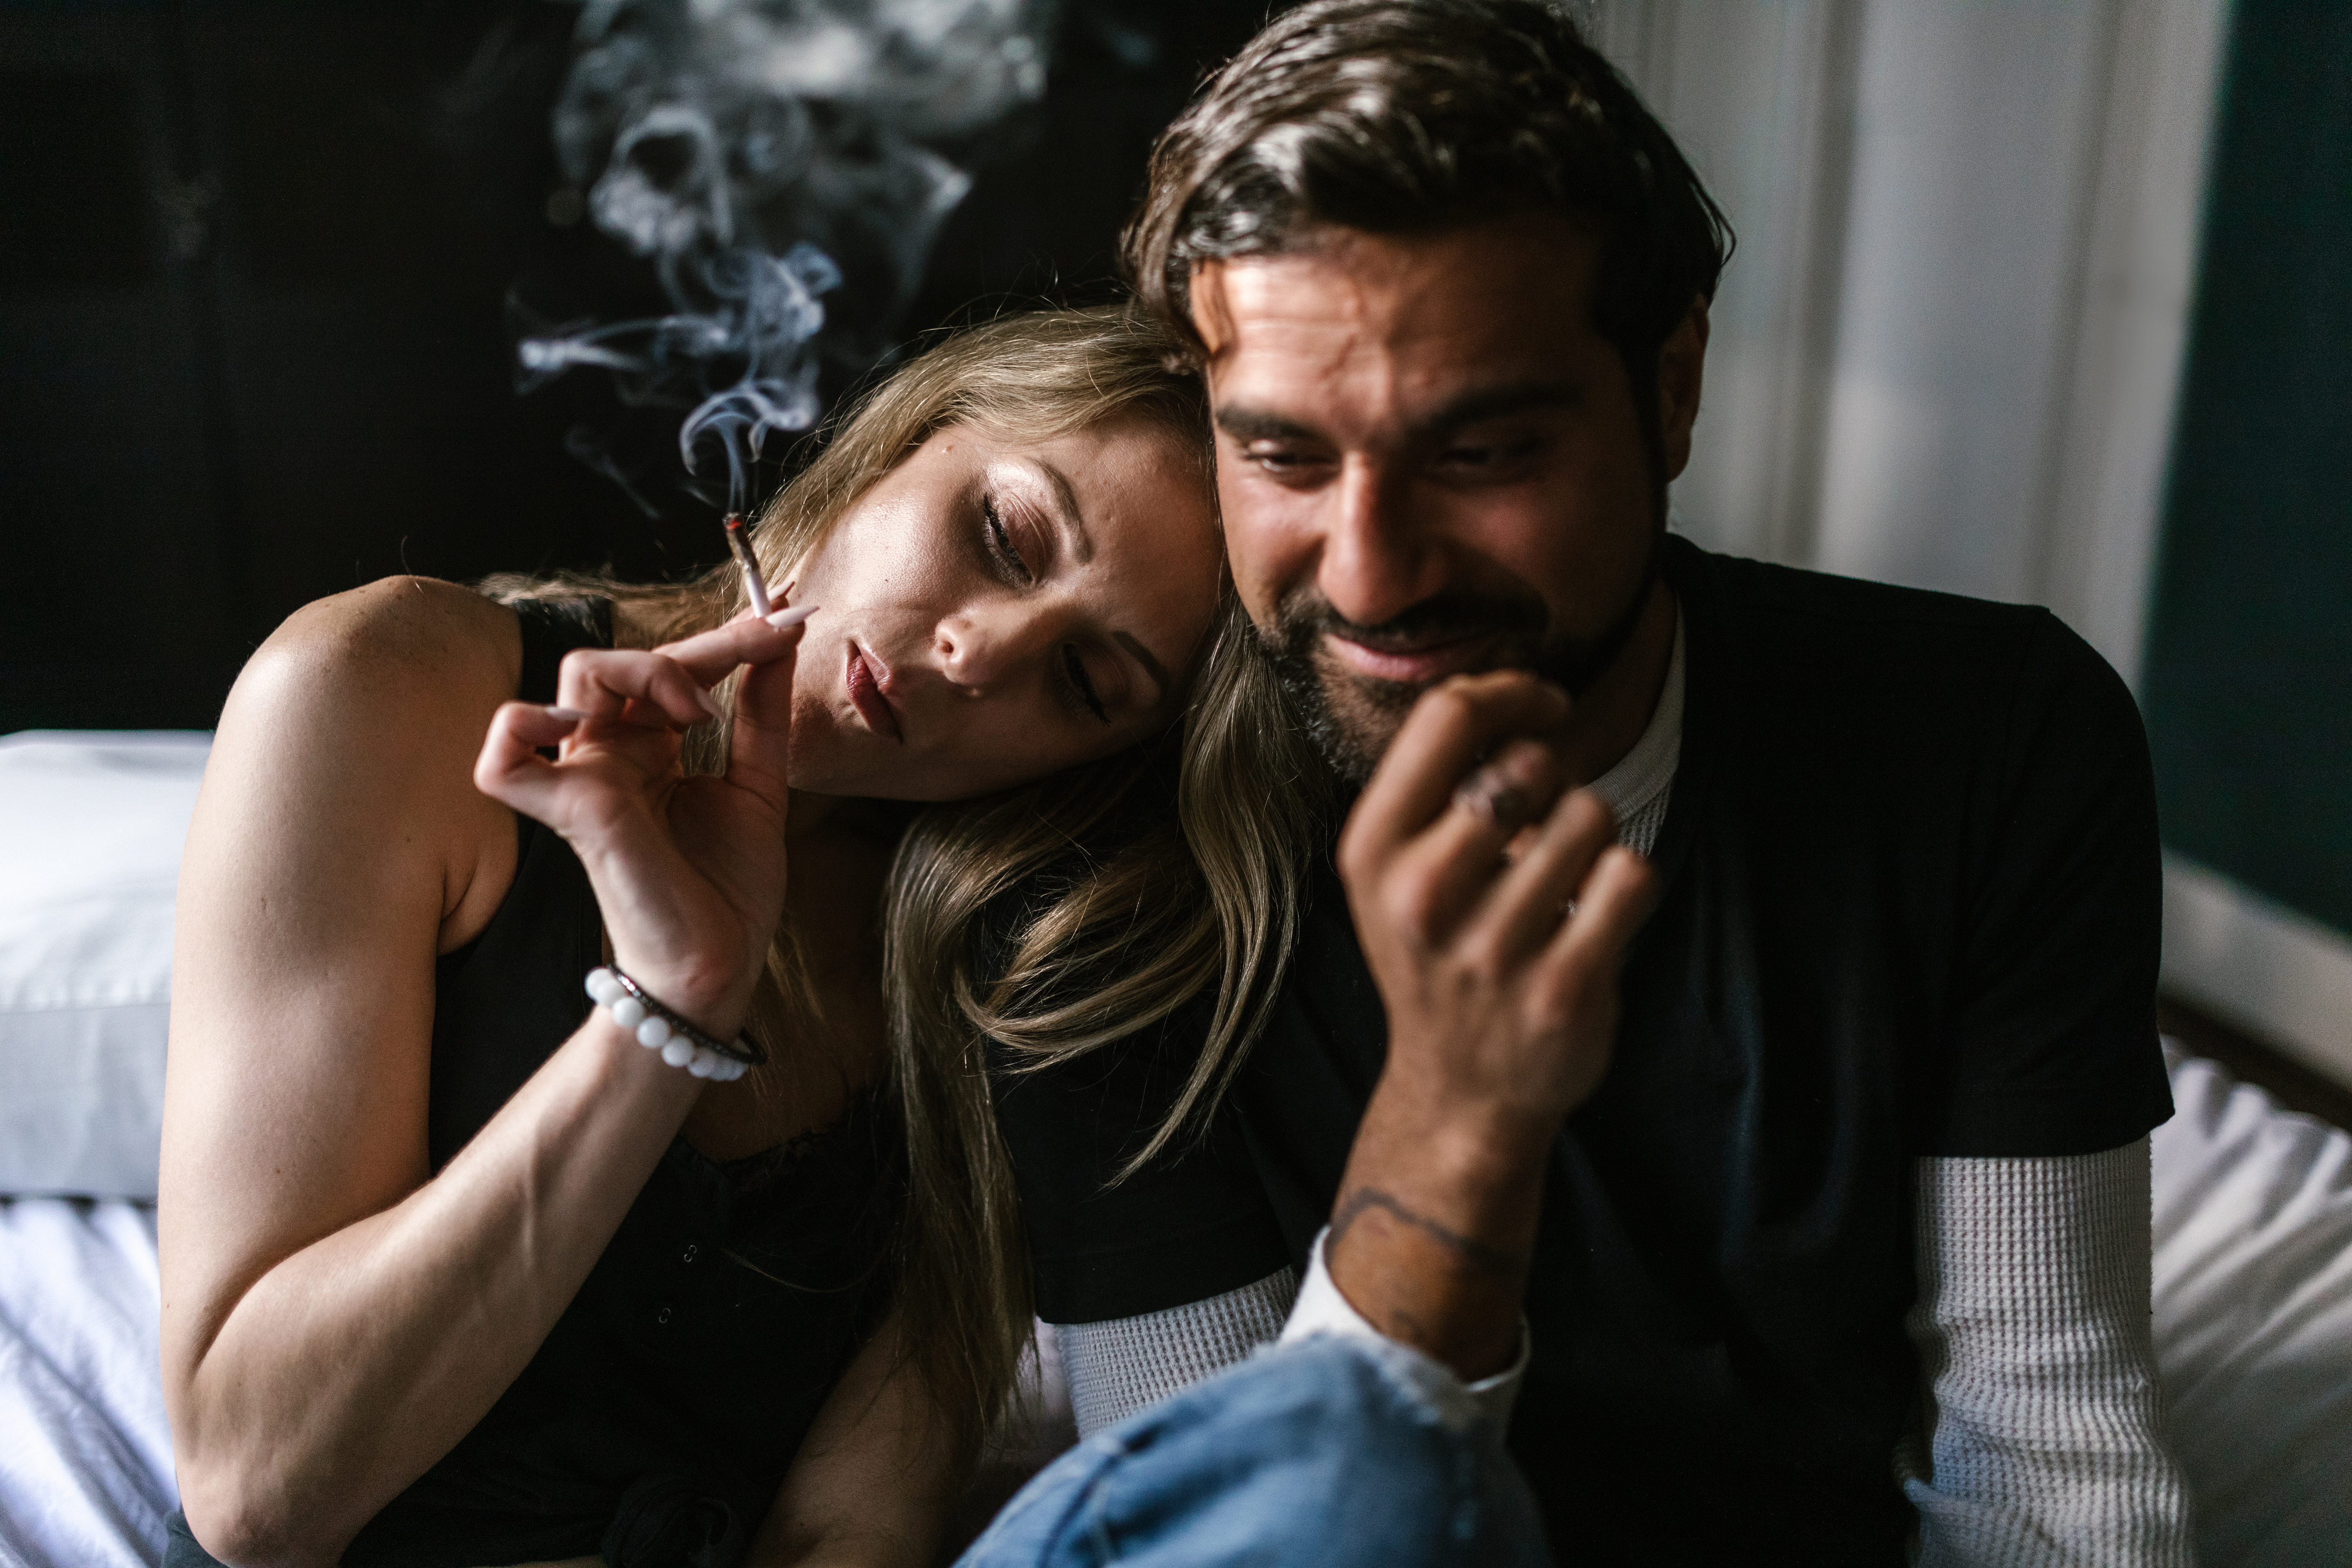 A Couple Smoking Together